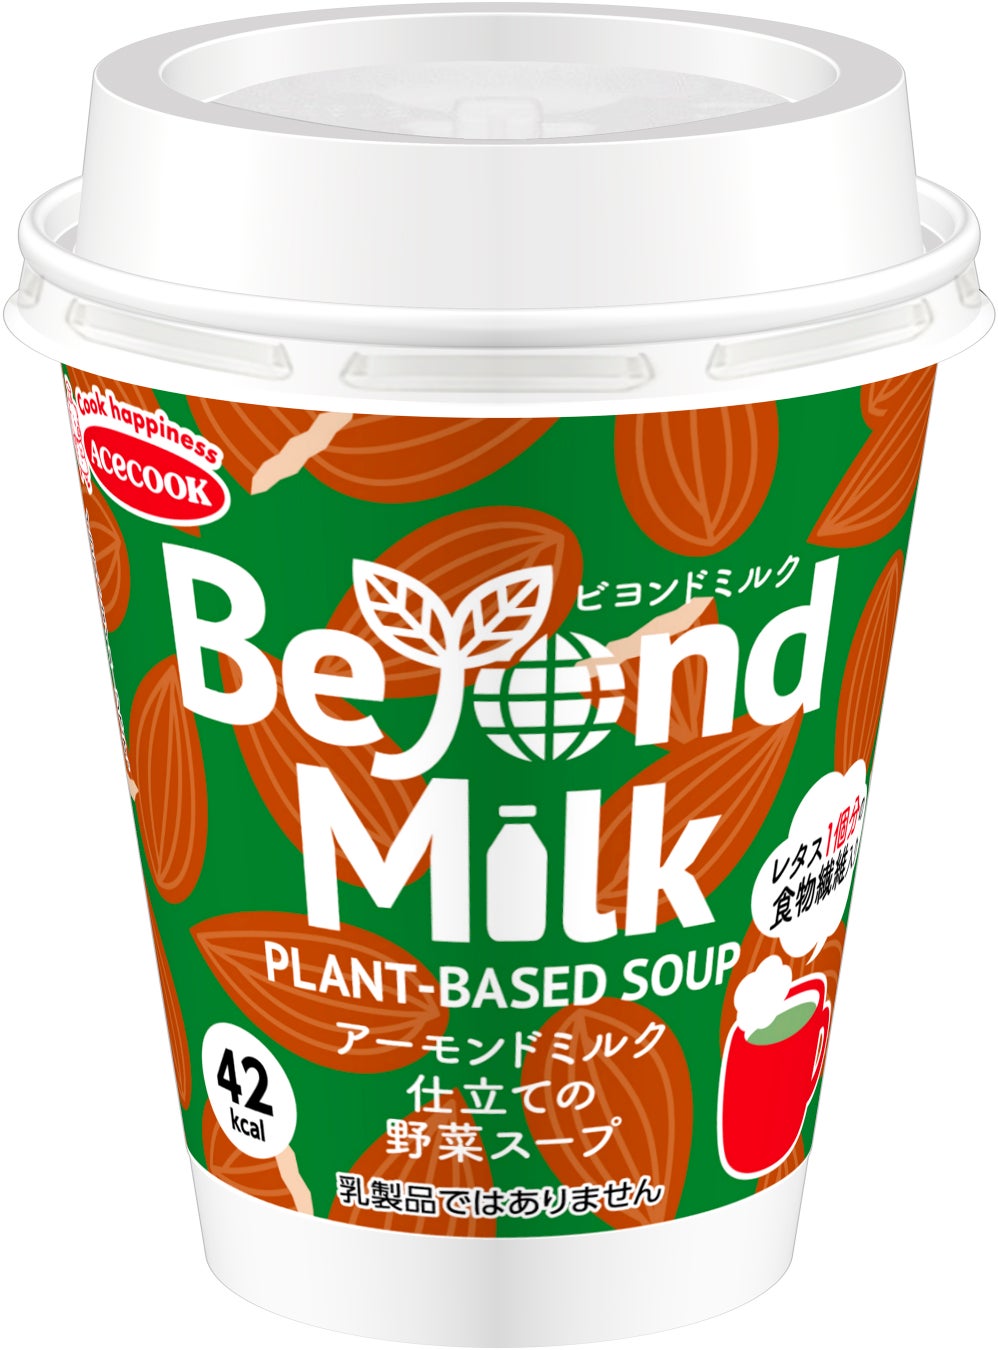 Beyond Milk Plant Based Soup (ビヨンドミルク プラントベーススープ)　新発売